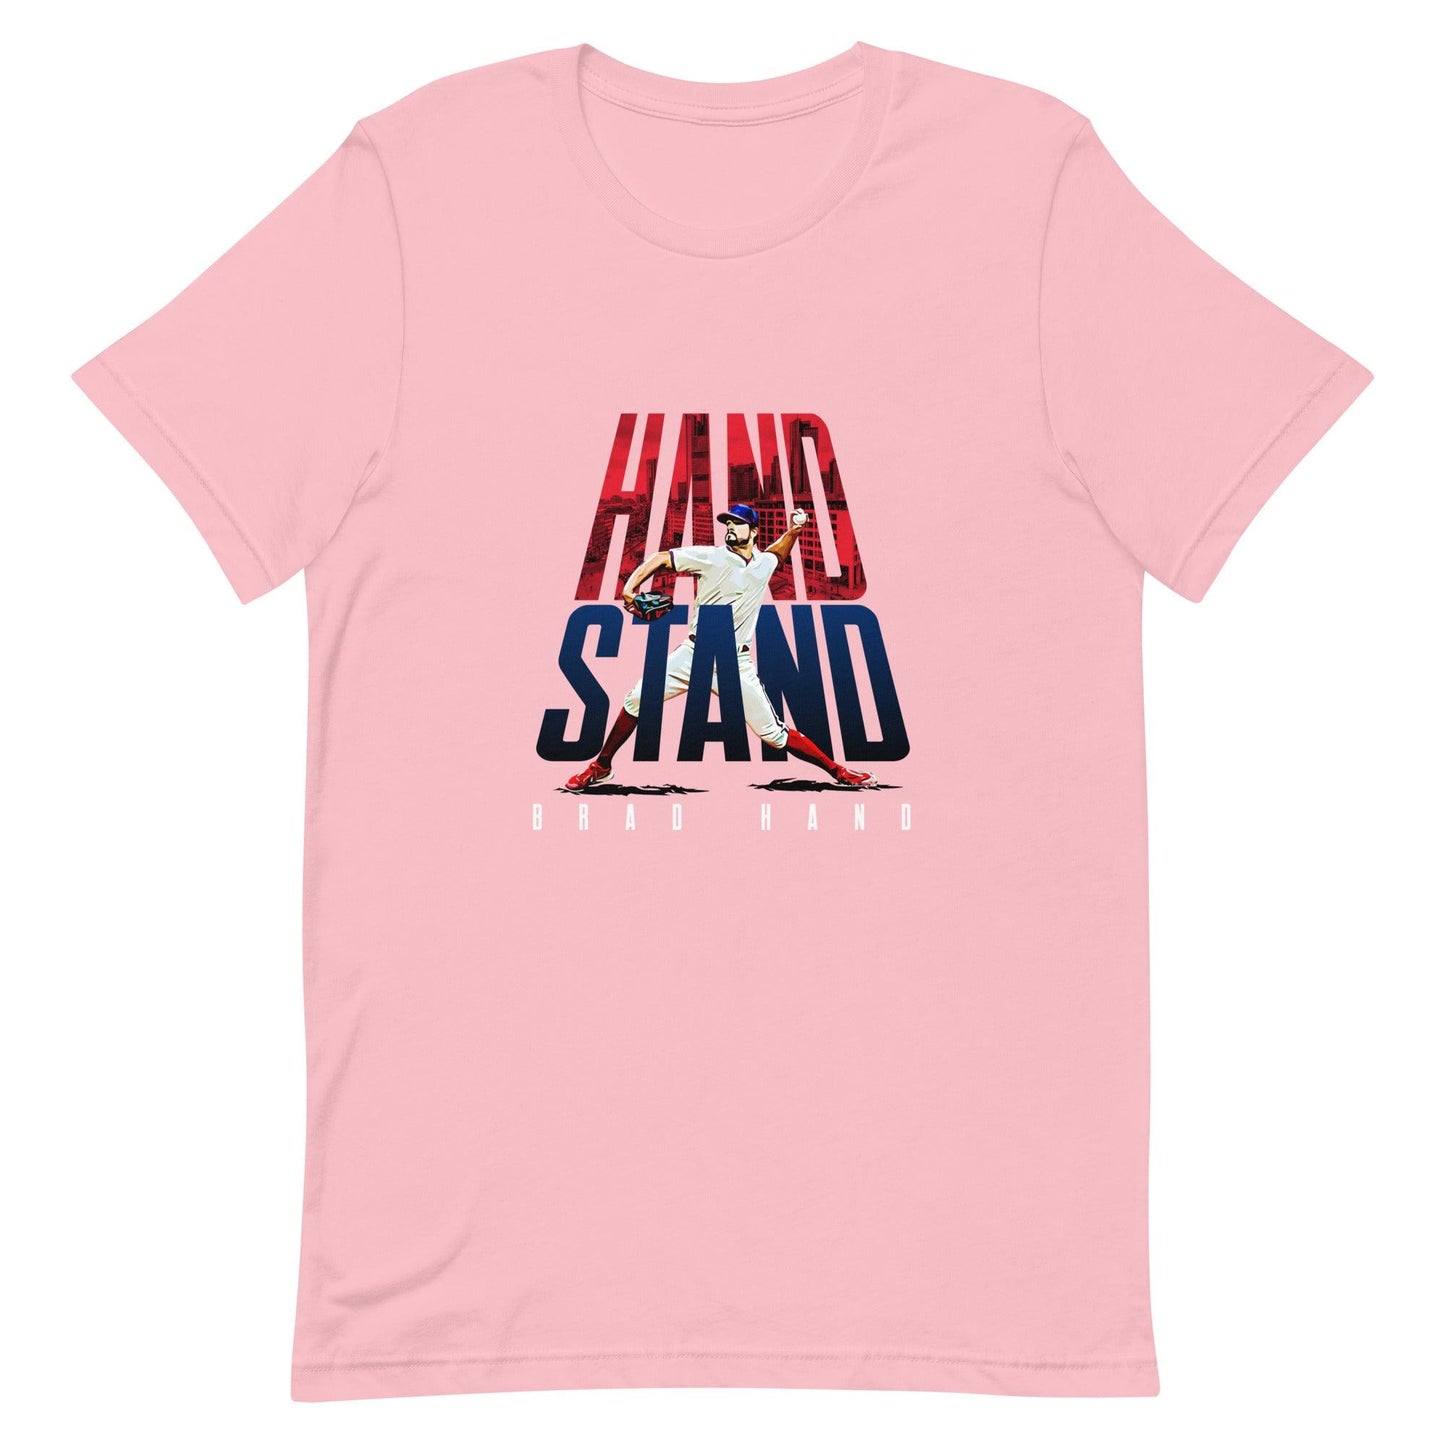 Brad Hand "Hand Stand" t-shirt - Fan Arch